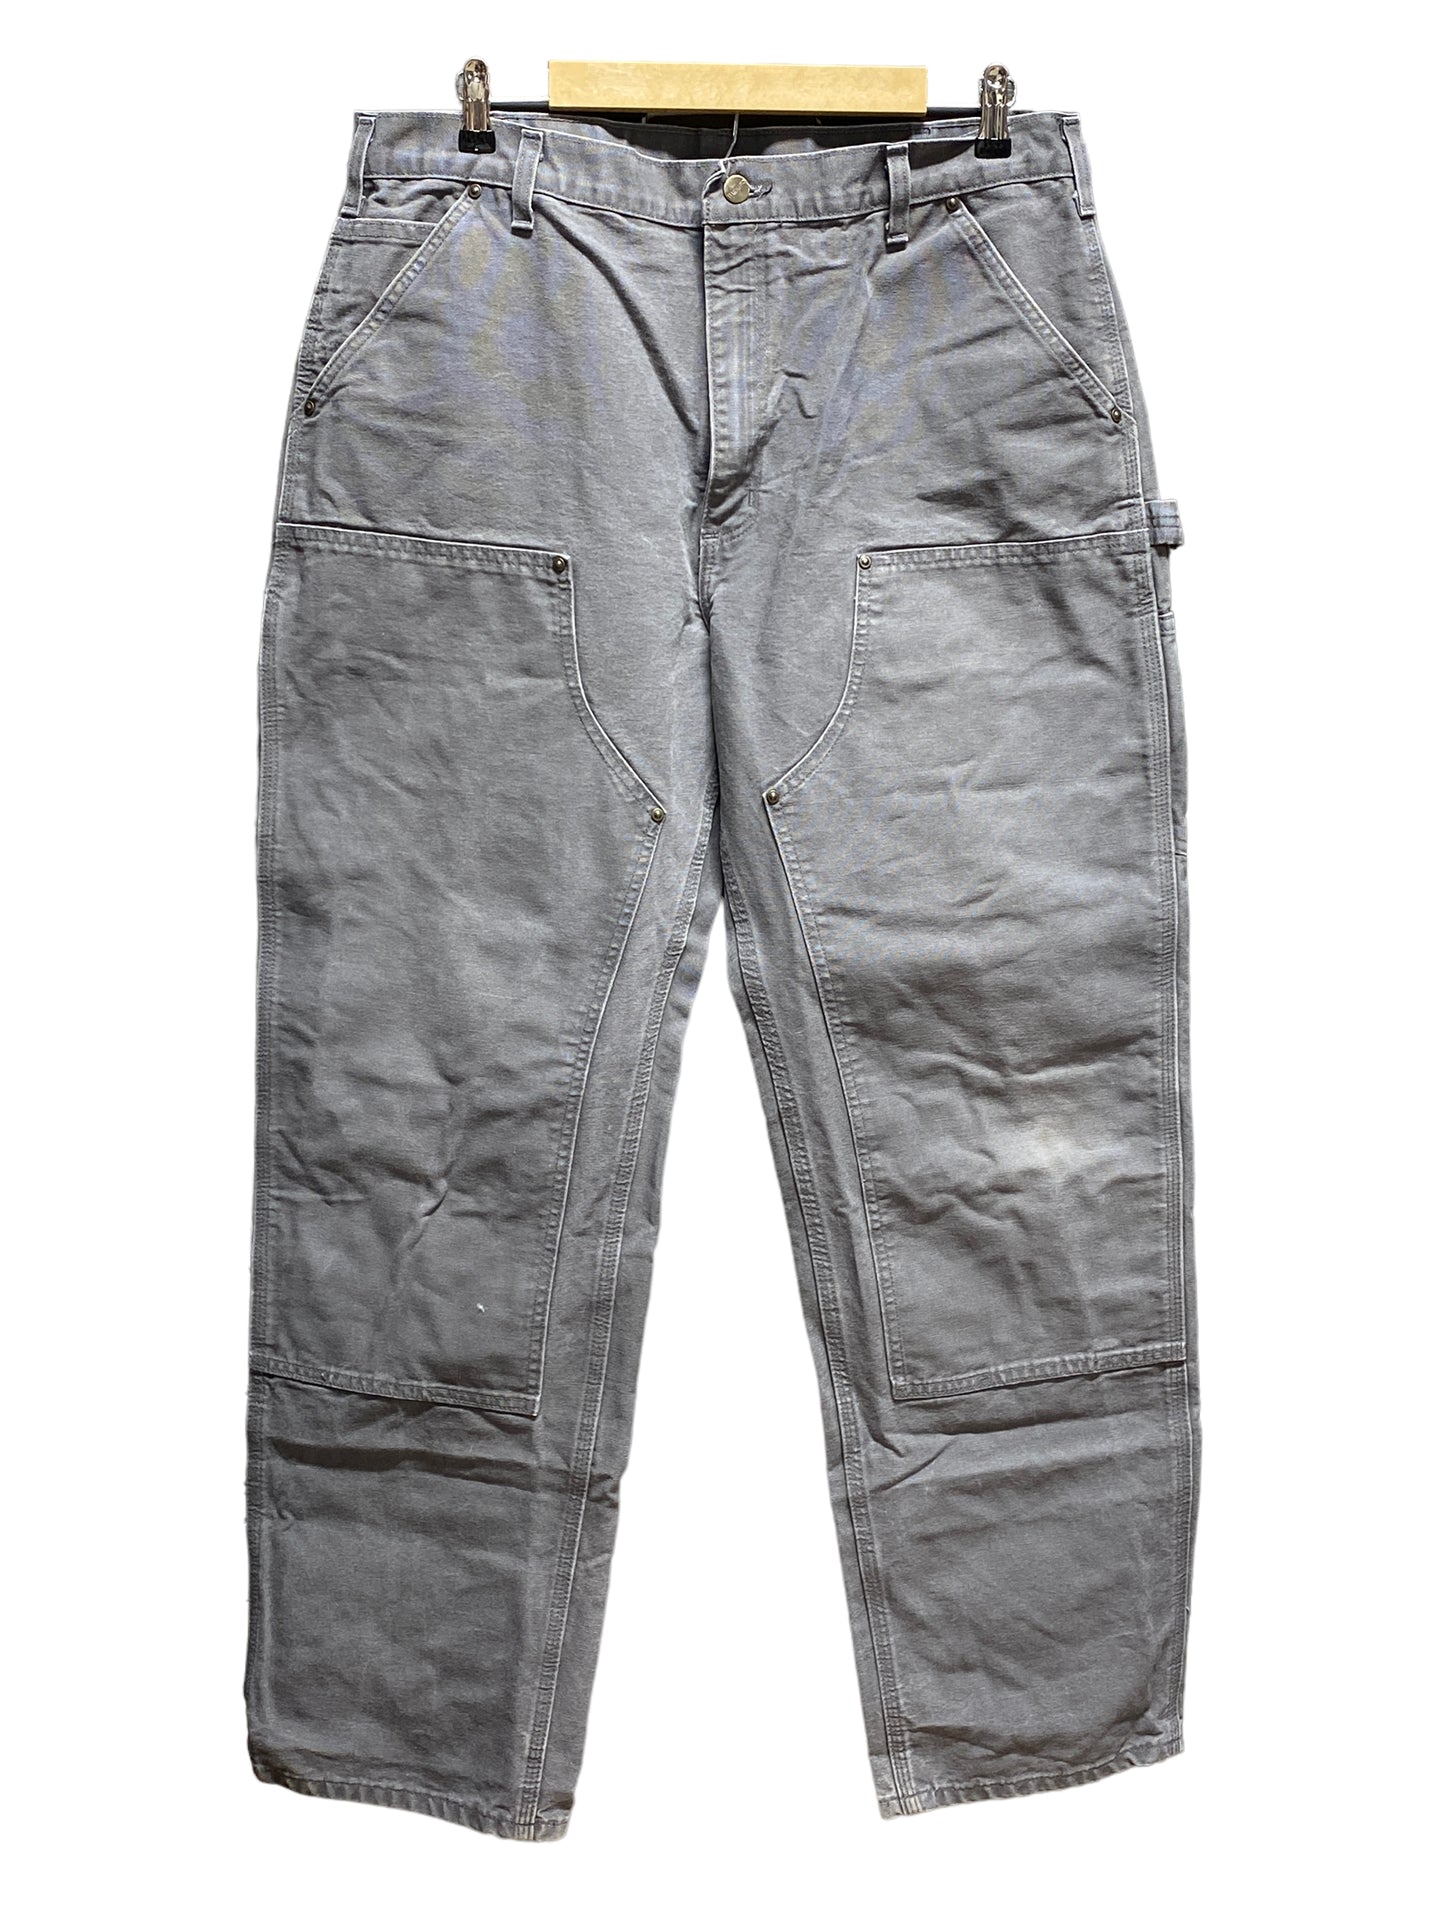 Carhartt Double Knee Carpenter Pants Gray Size 38x34